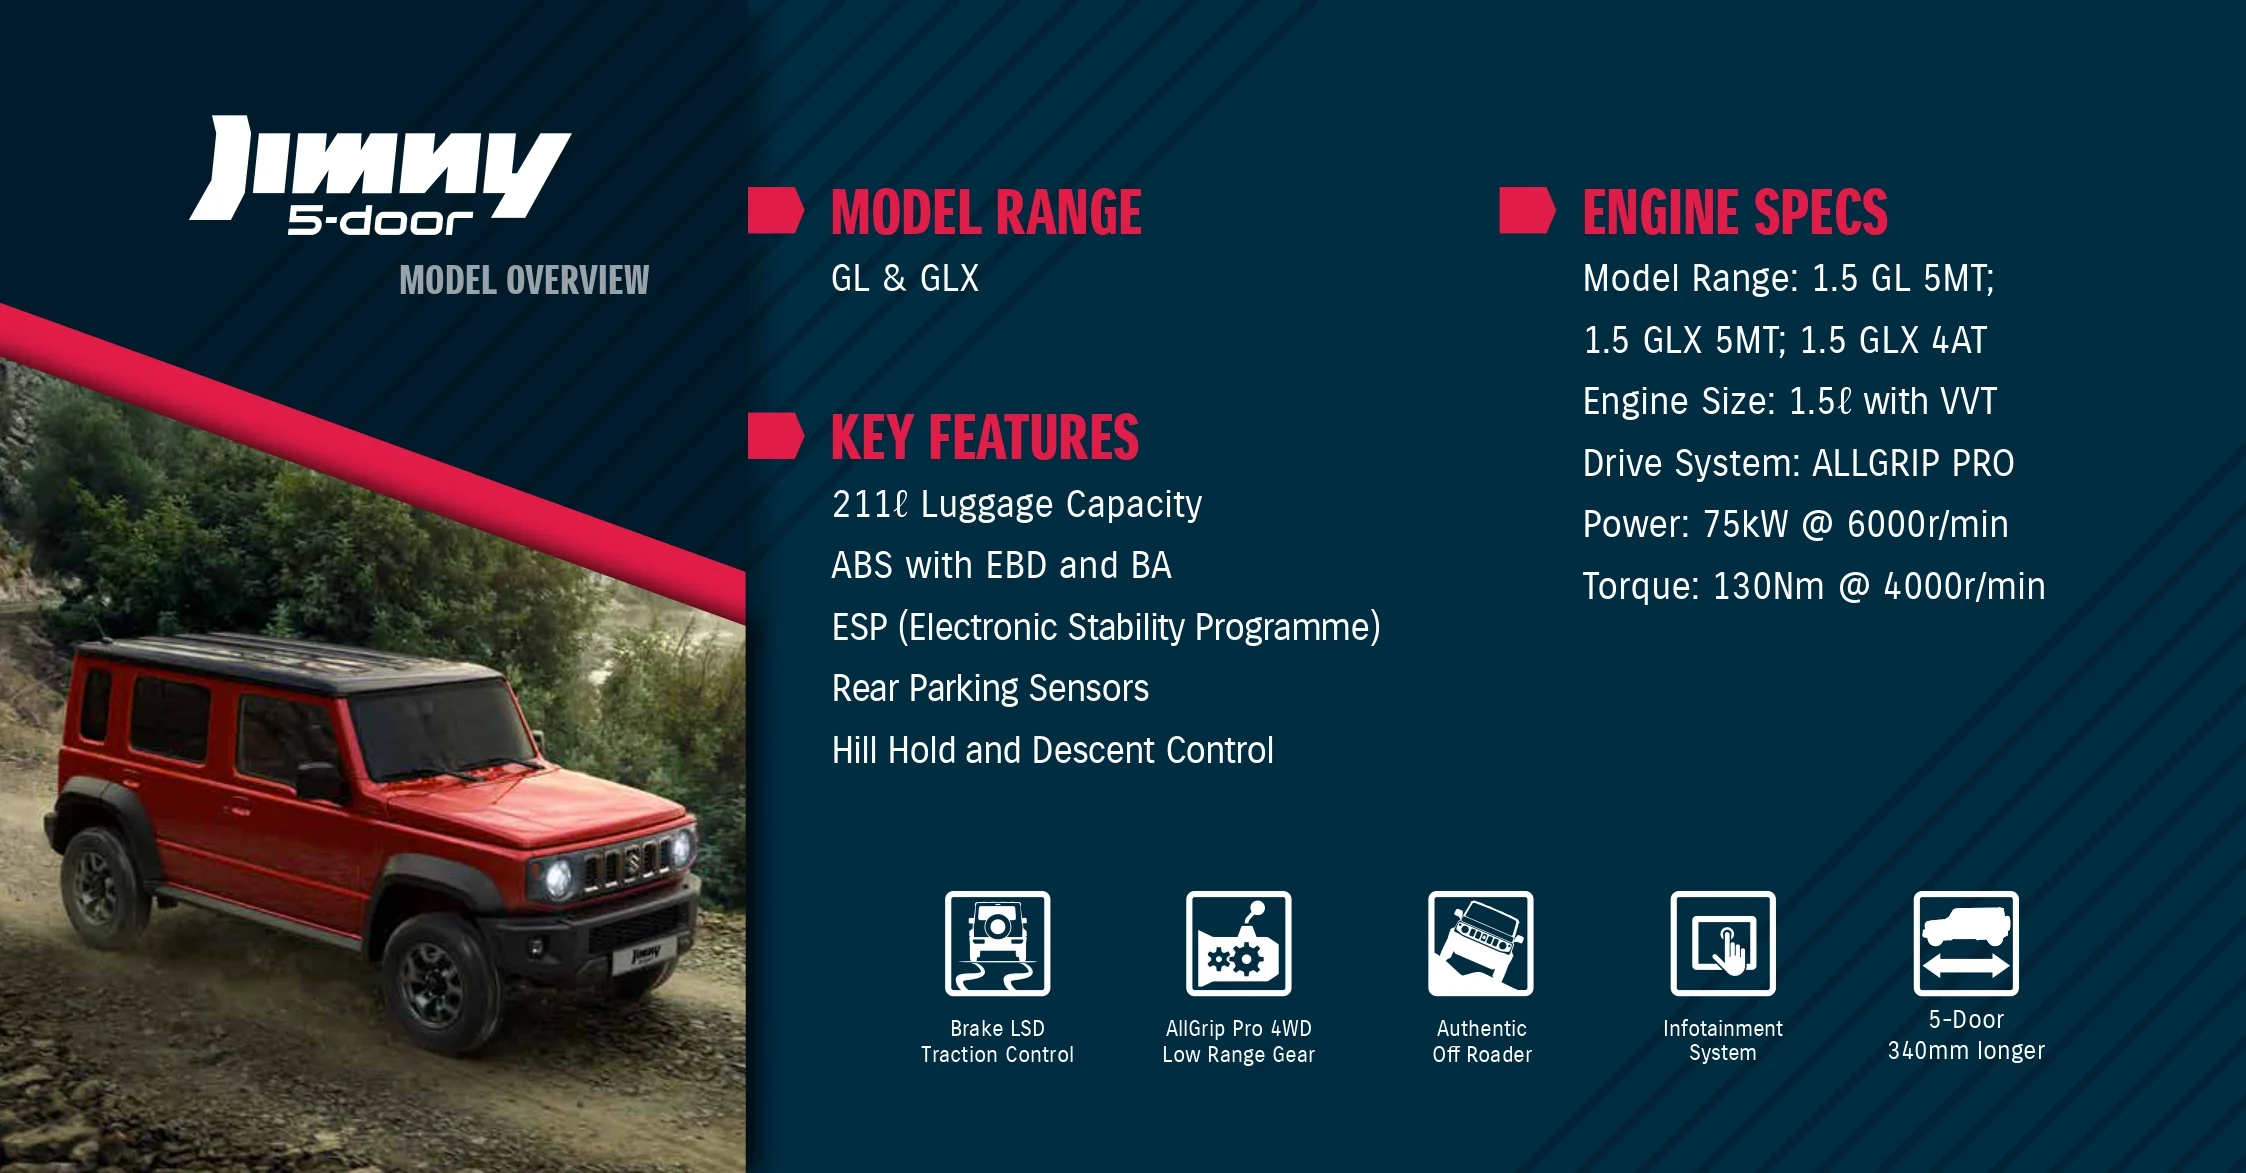 Suzuki Jimny Electric 4x4 Imagined With Three- and Five-Door Options -  autoevolution